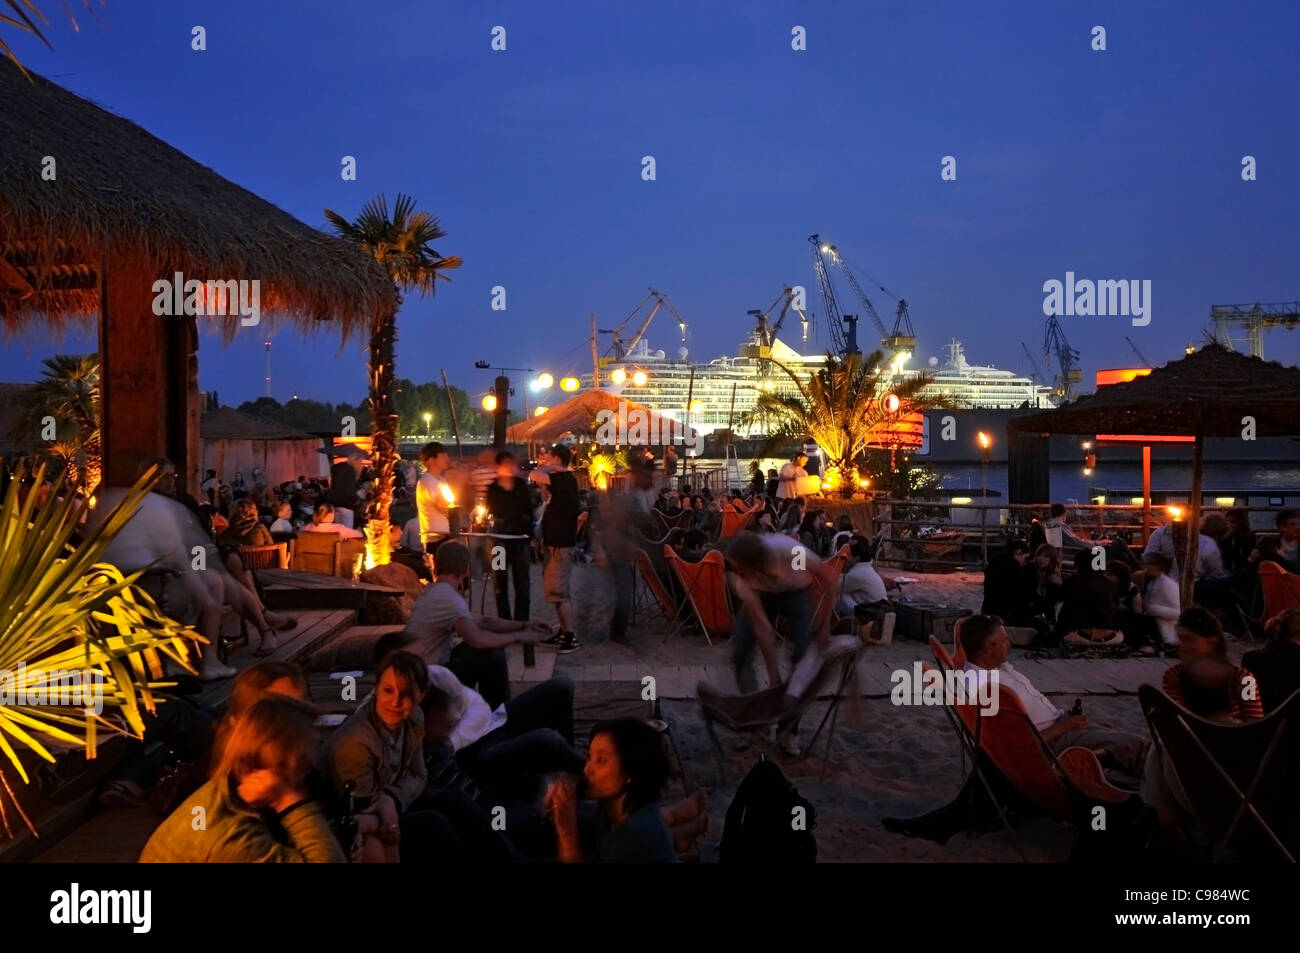 Strandpauli Beach Club with guests, summer atmosphere at night, Hamburg, Germany, Europe Stock Photo